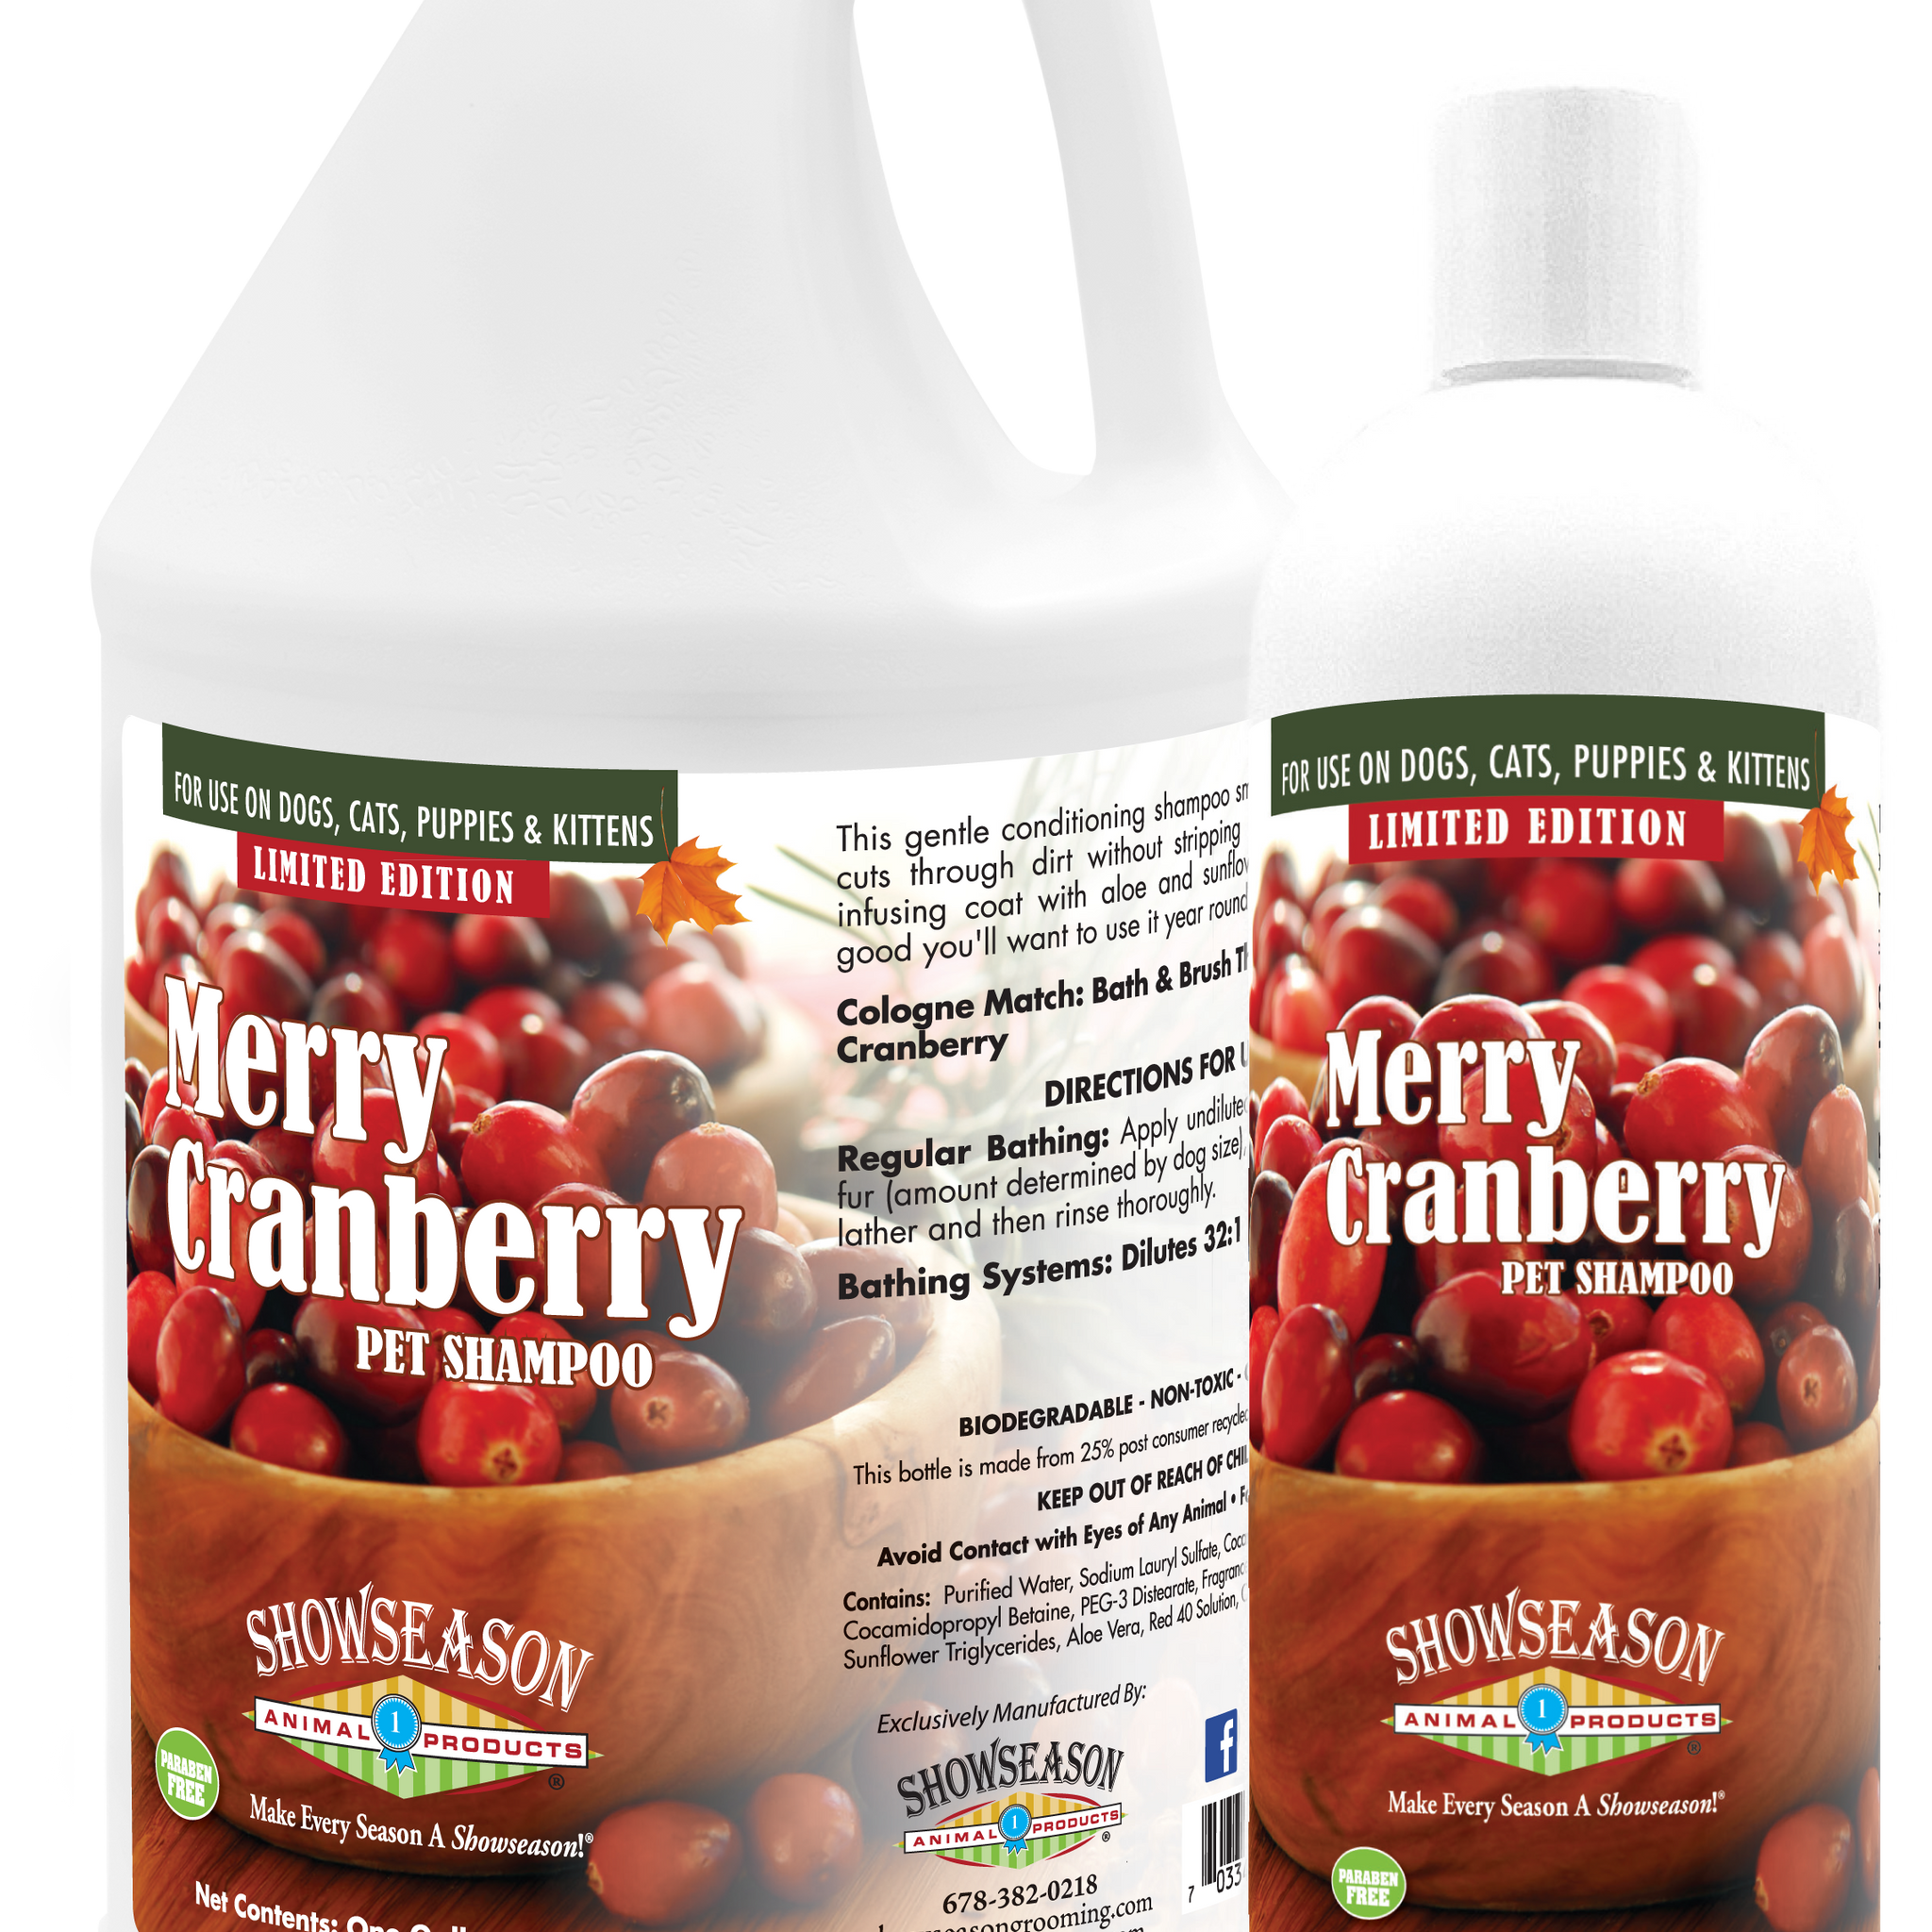 Merry Cranberry Pet Shampoo | Showseason®